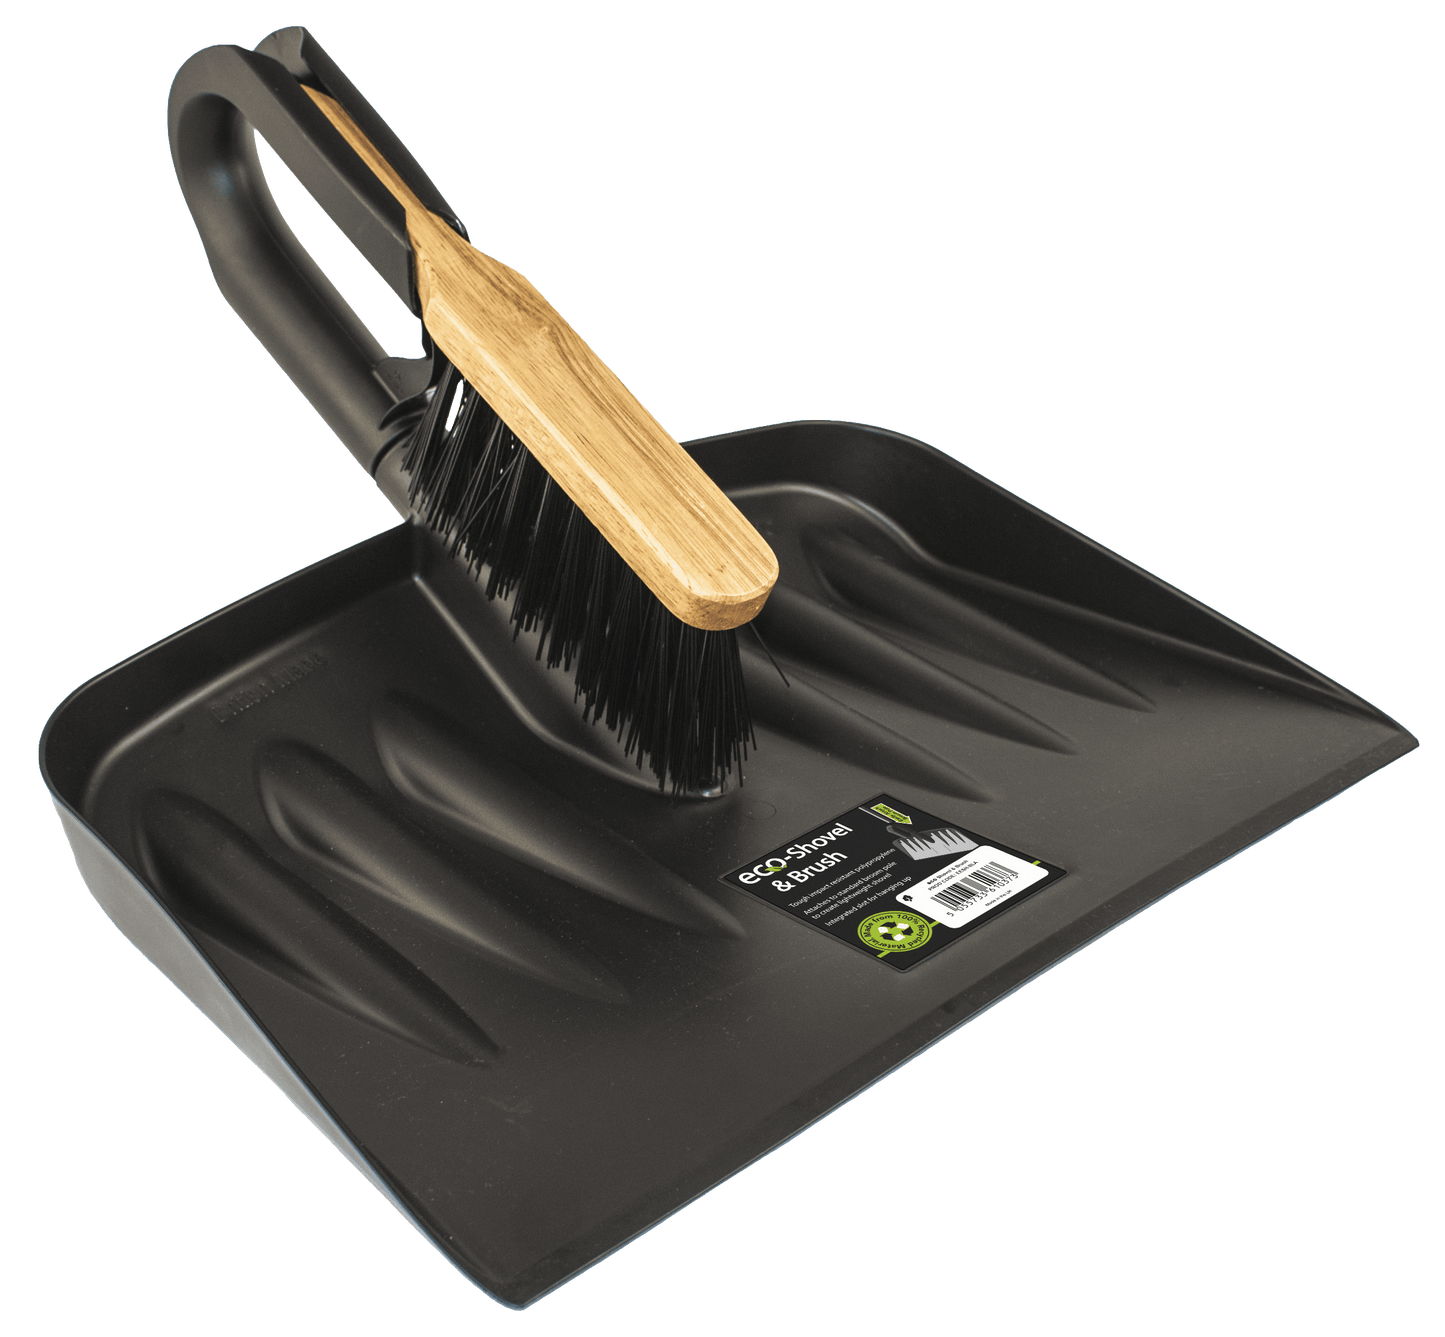 Etree Etree Eco Shovel - Heavy-Duty Impact Resistant Hand Shovel with Hard Brush | Large Dustpan for Outdoors, Garden, Rubble, Work, Building Site Shovels & Spades